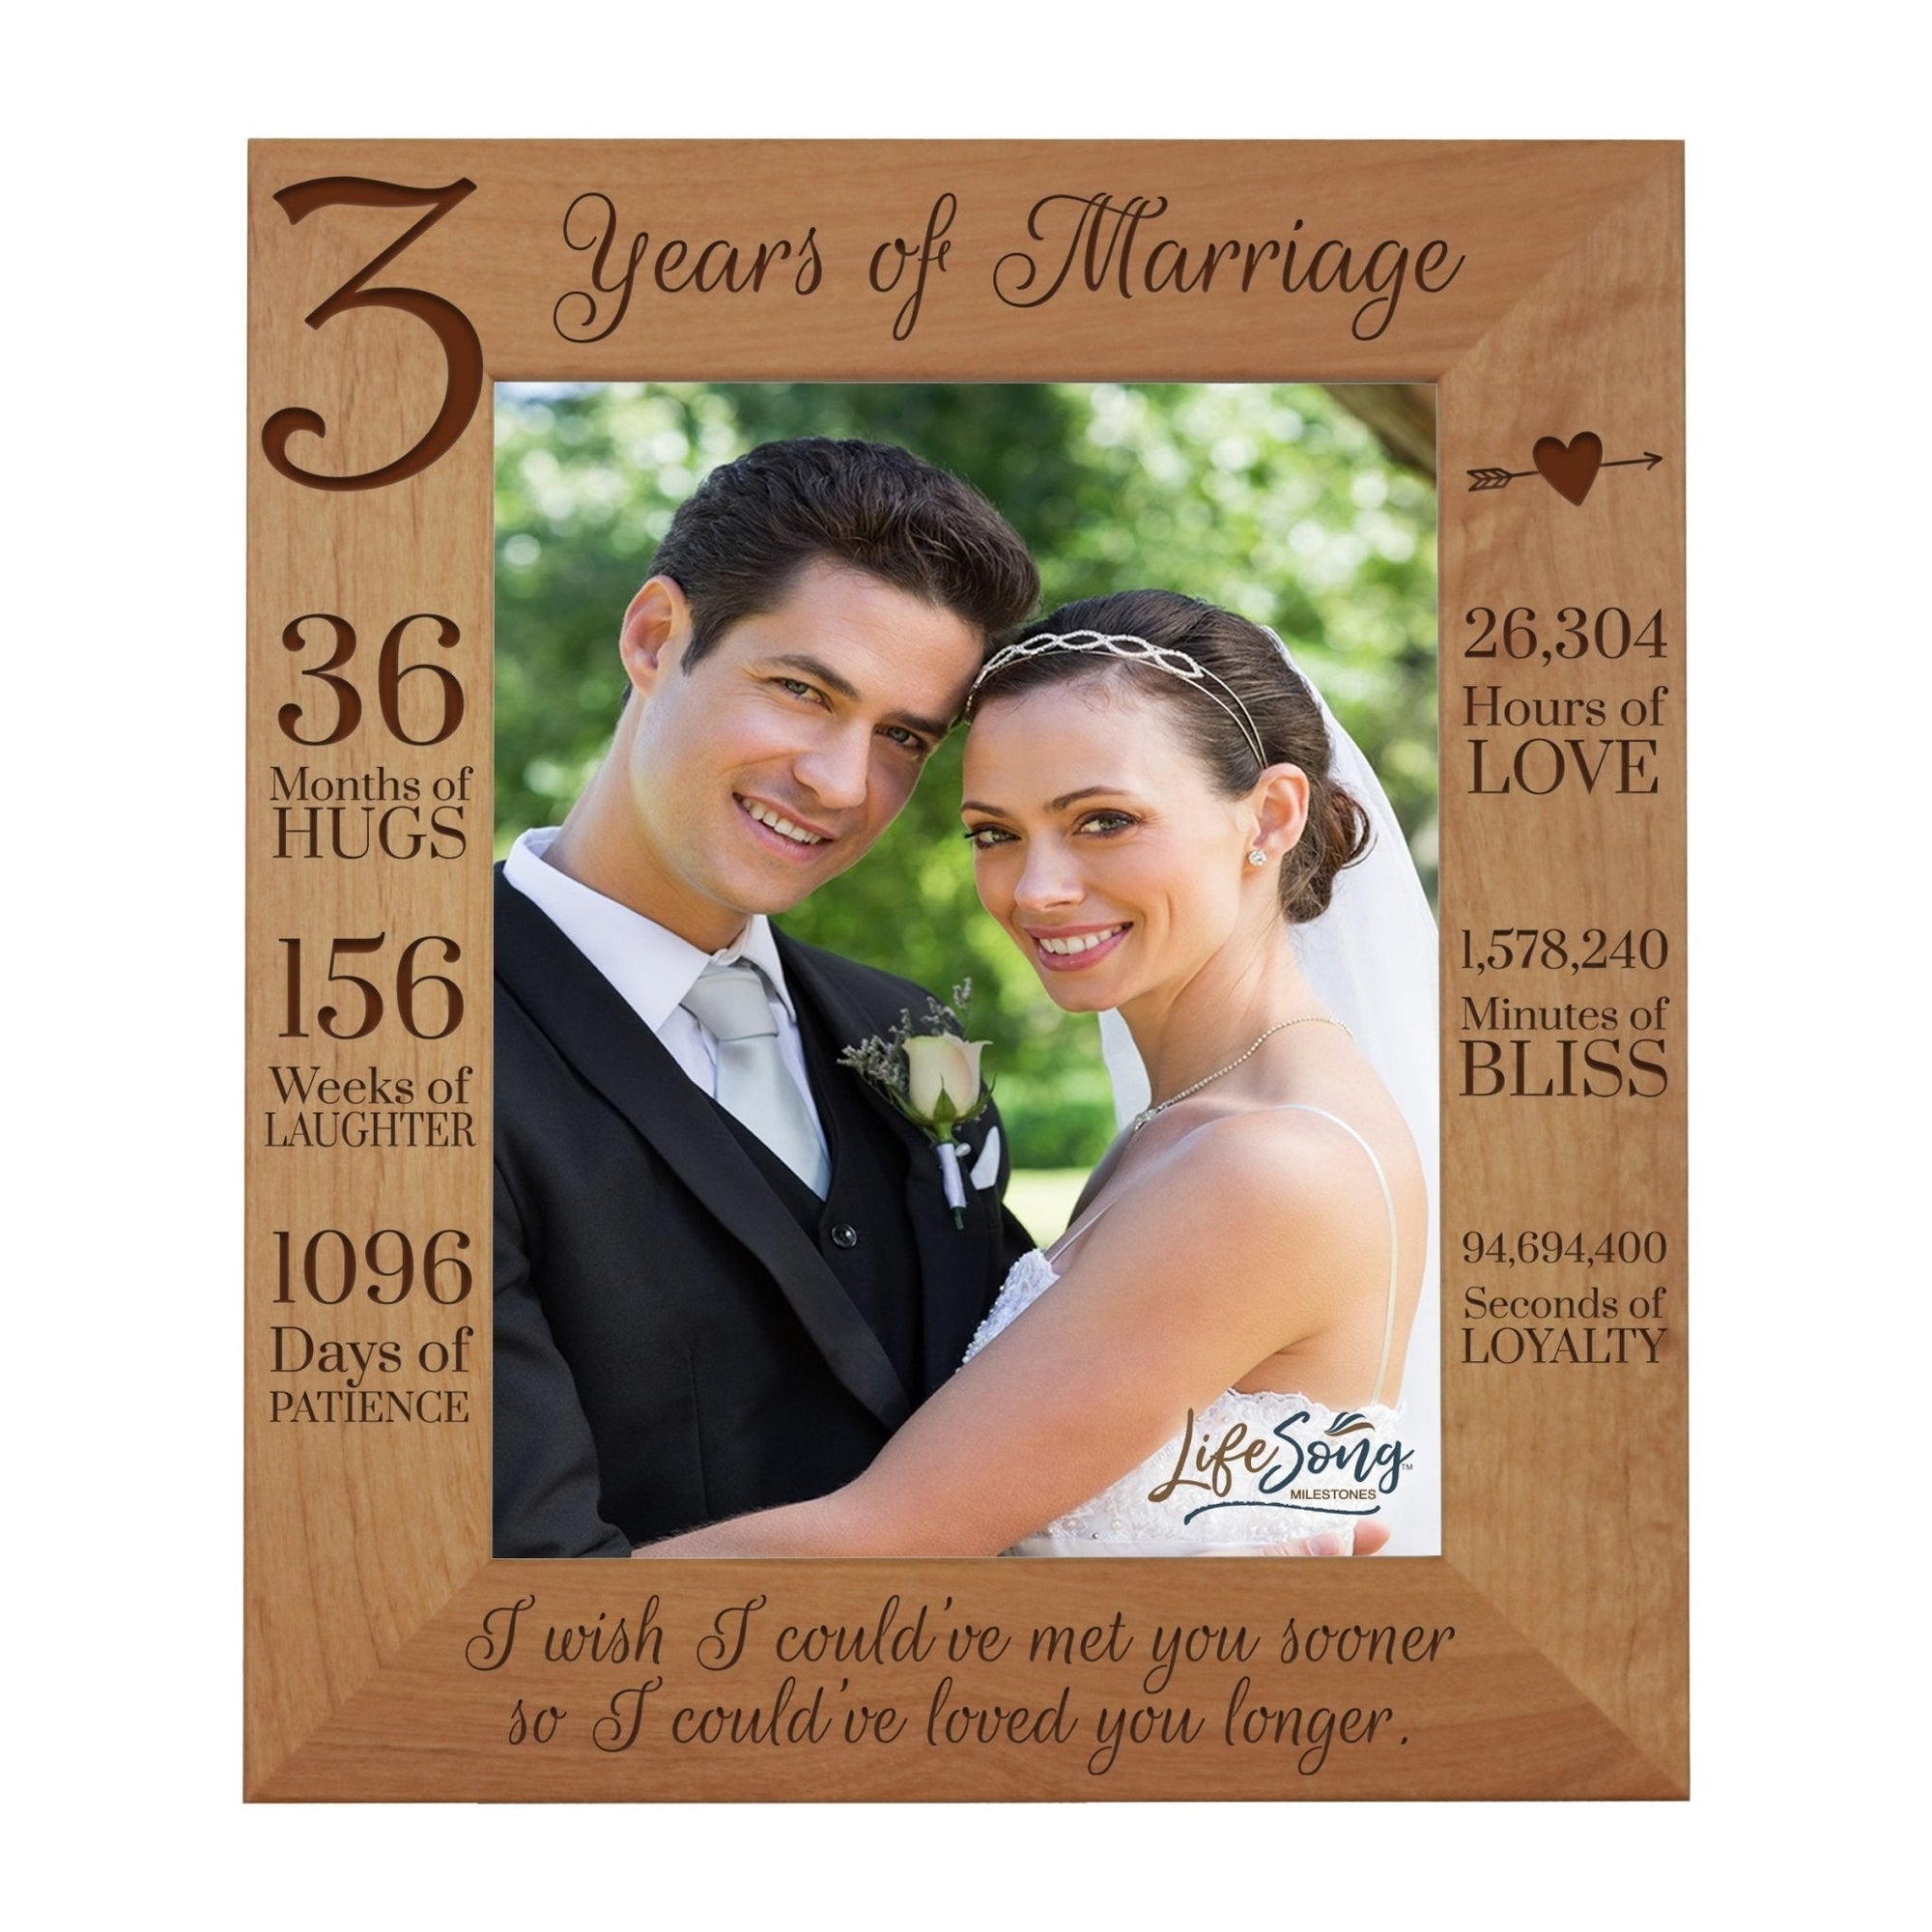 Couples 3rd Wedding Anniversary Photo Frame Home Decor Gift Ideas - Met You Sooner - LifeSong Milestones